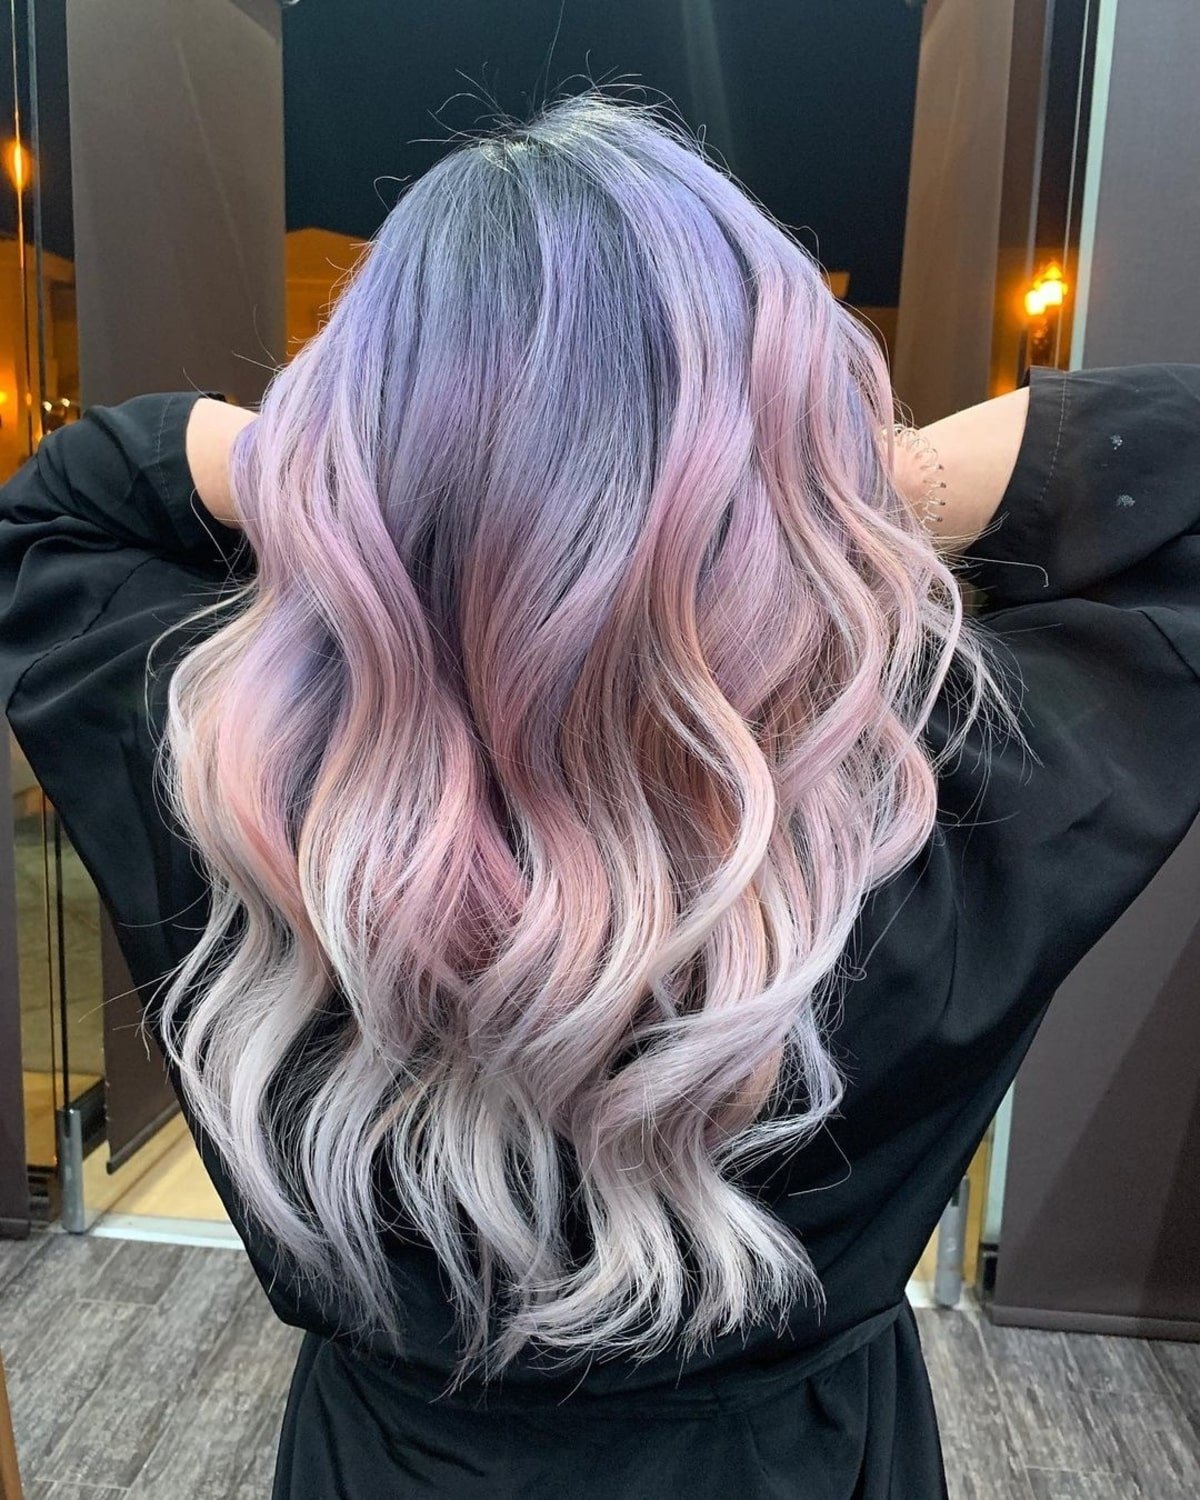 Light blue and purple hair highlights